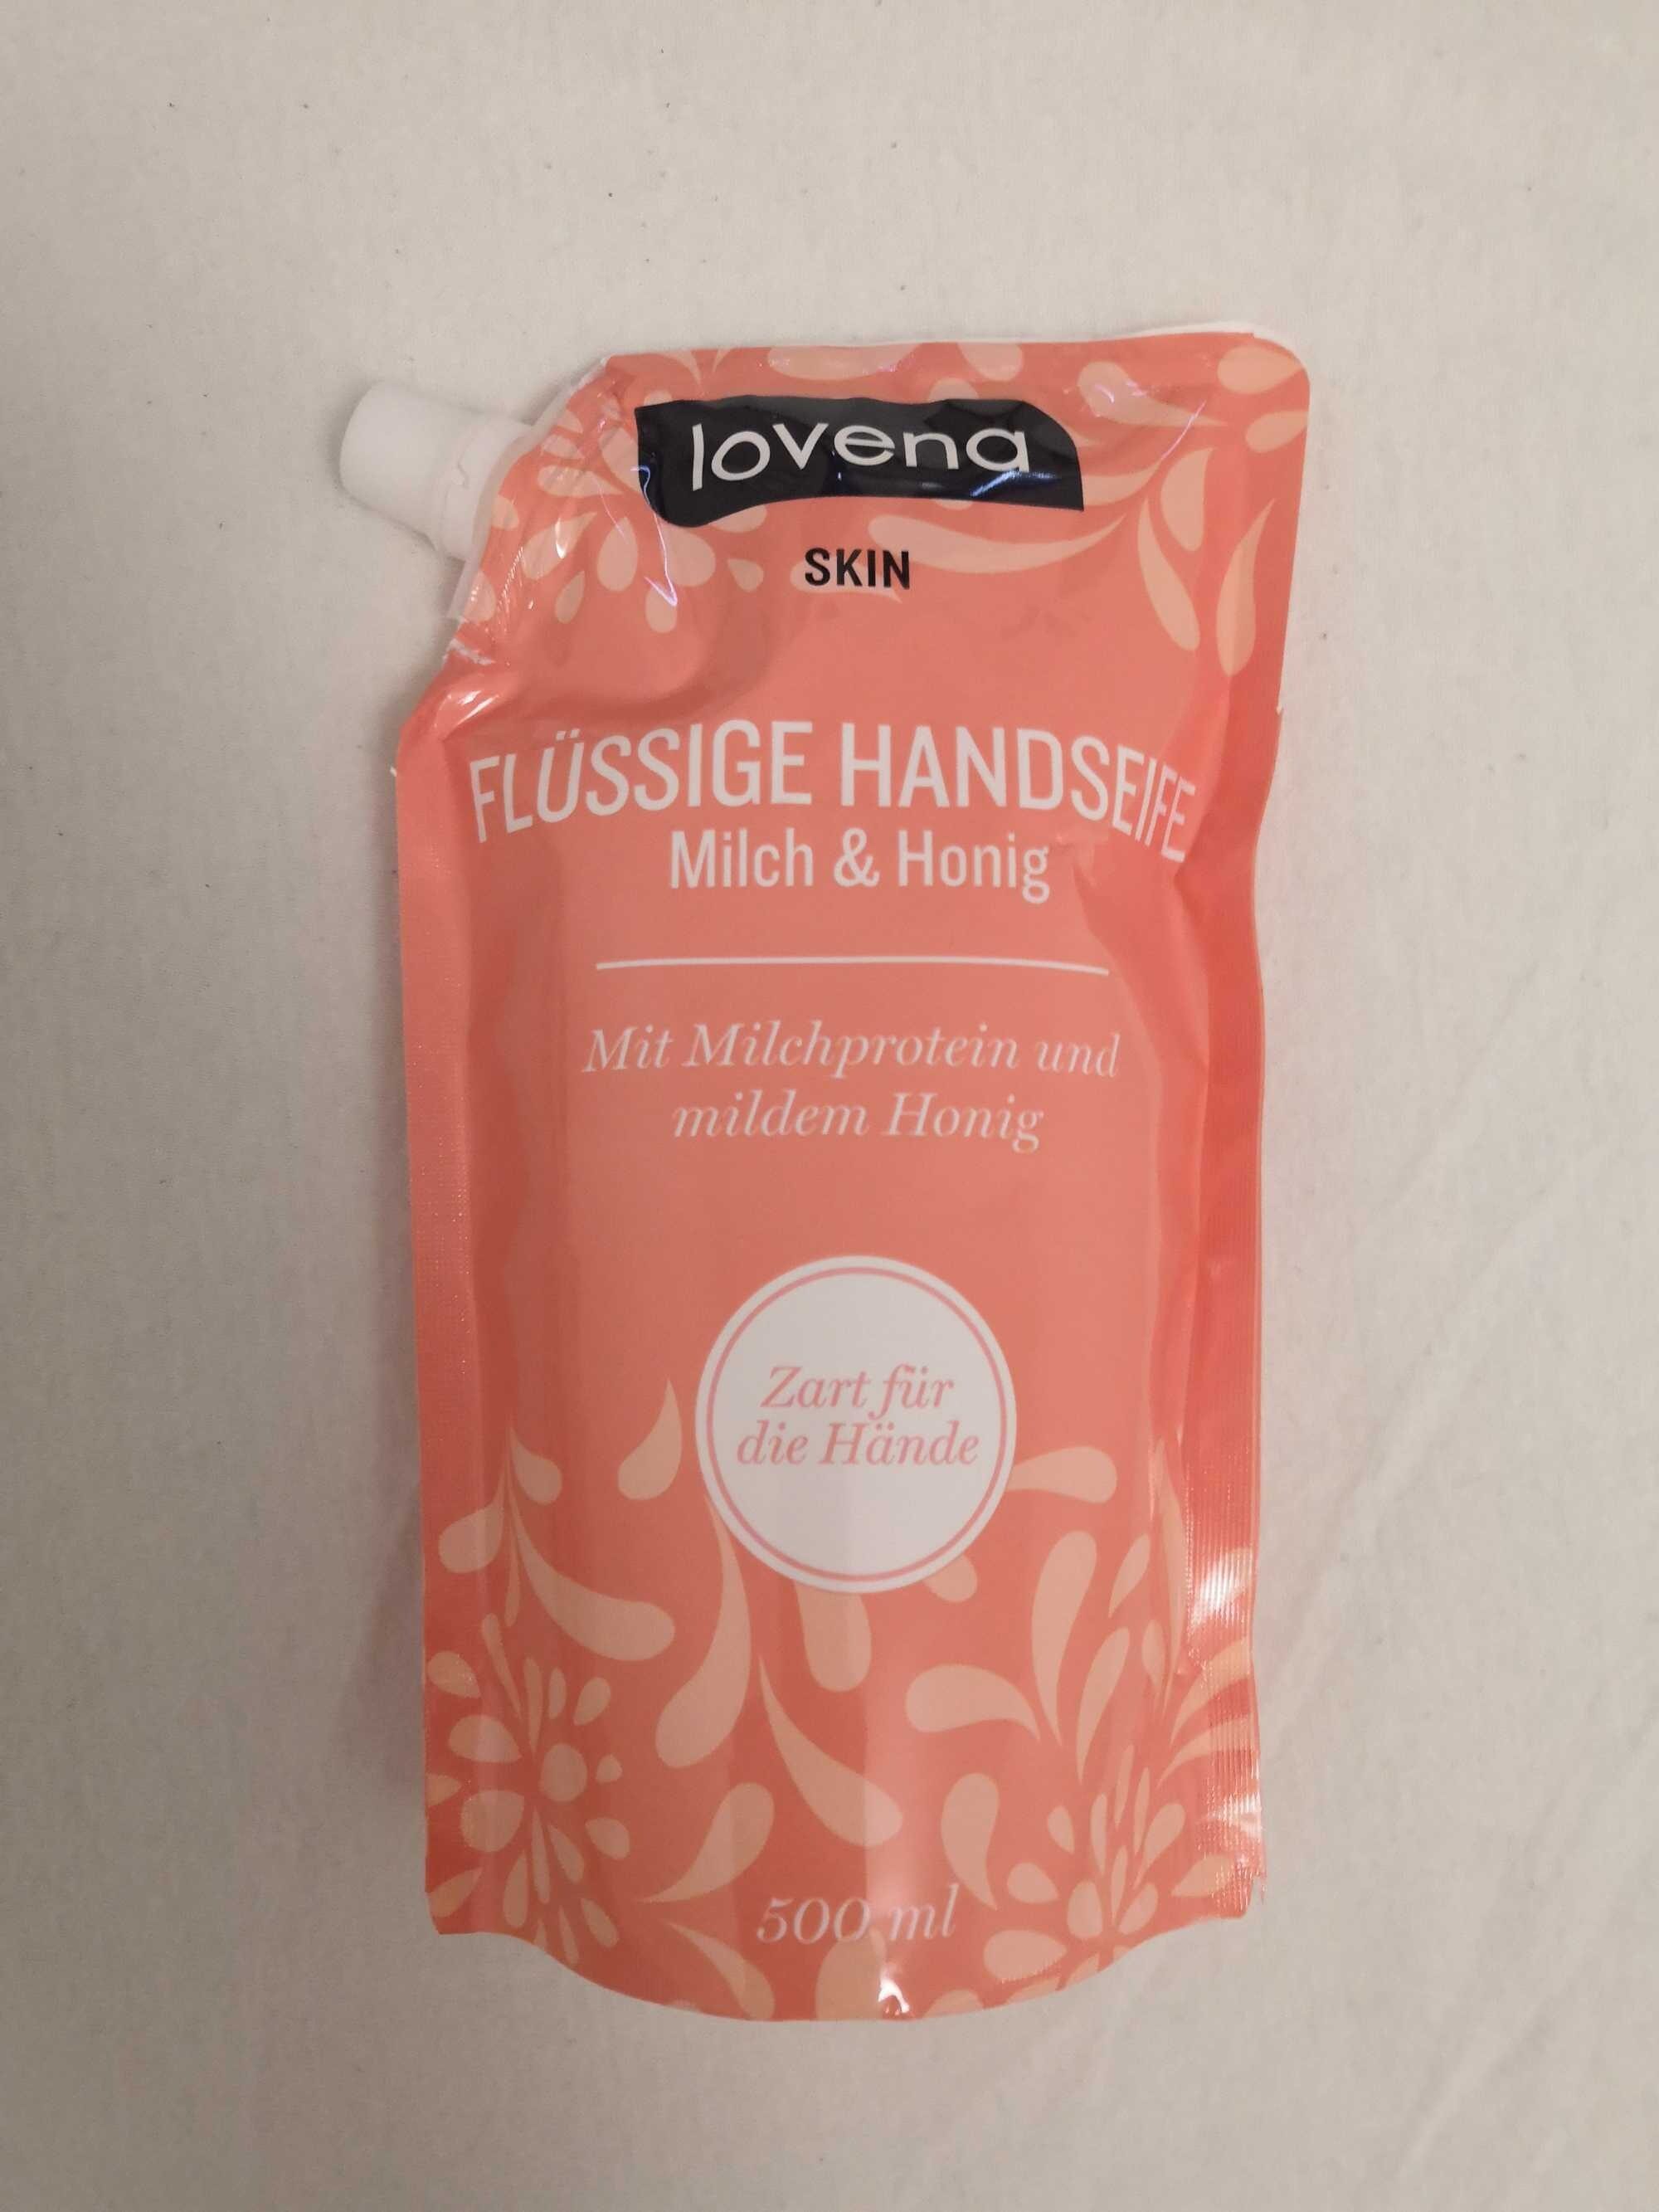 lovena Skin Flüssige Handseife Milch & Honig - Produkt - de